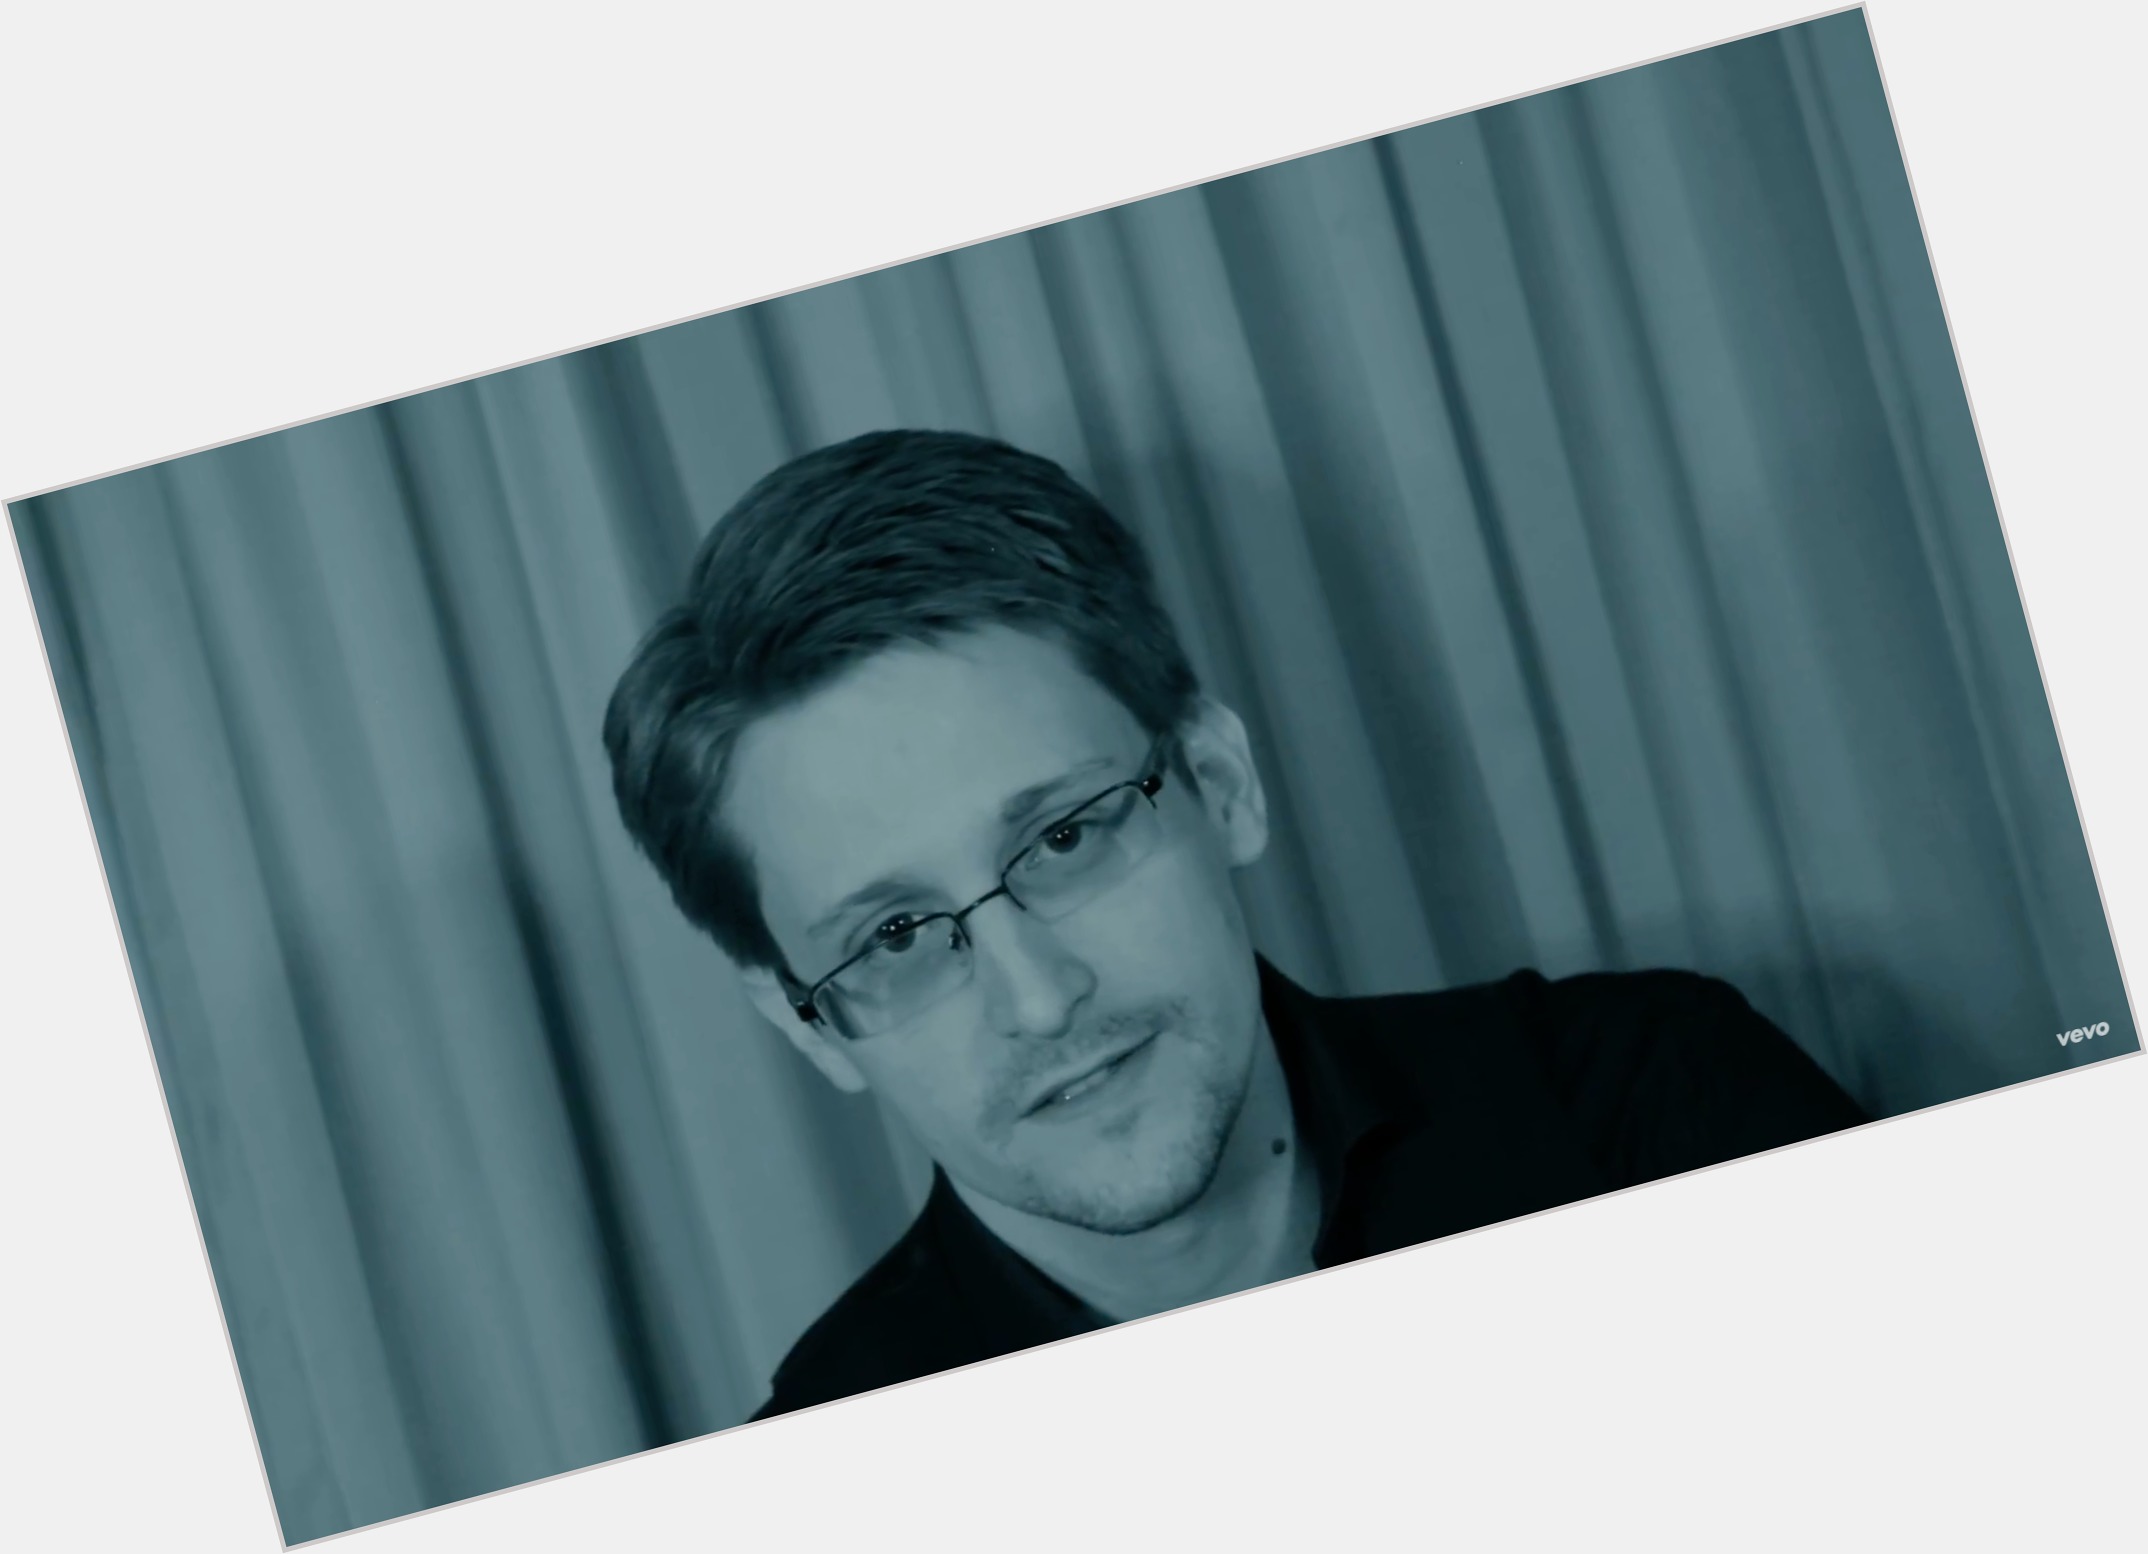 Edward Snowden full body 3